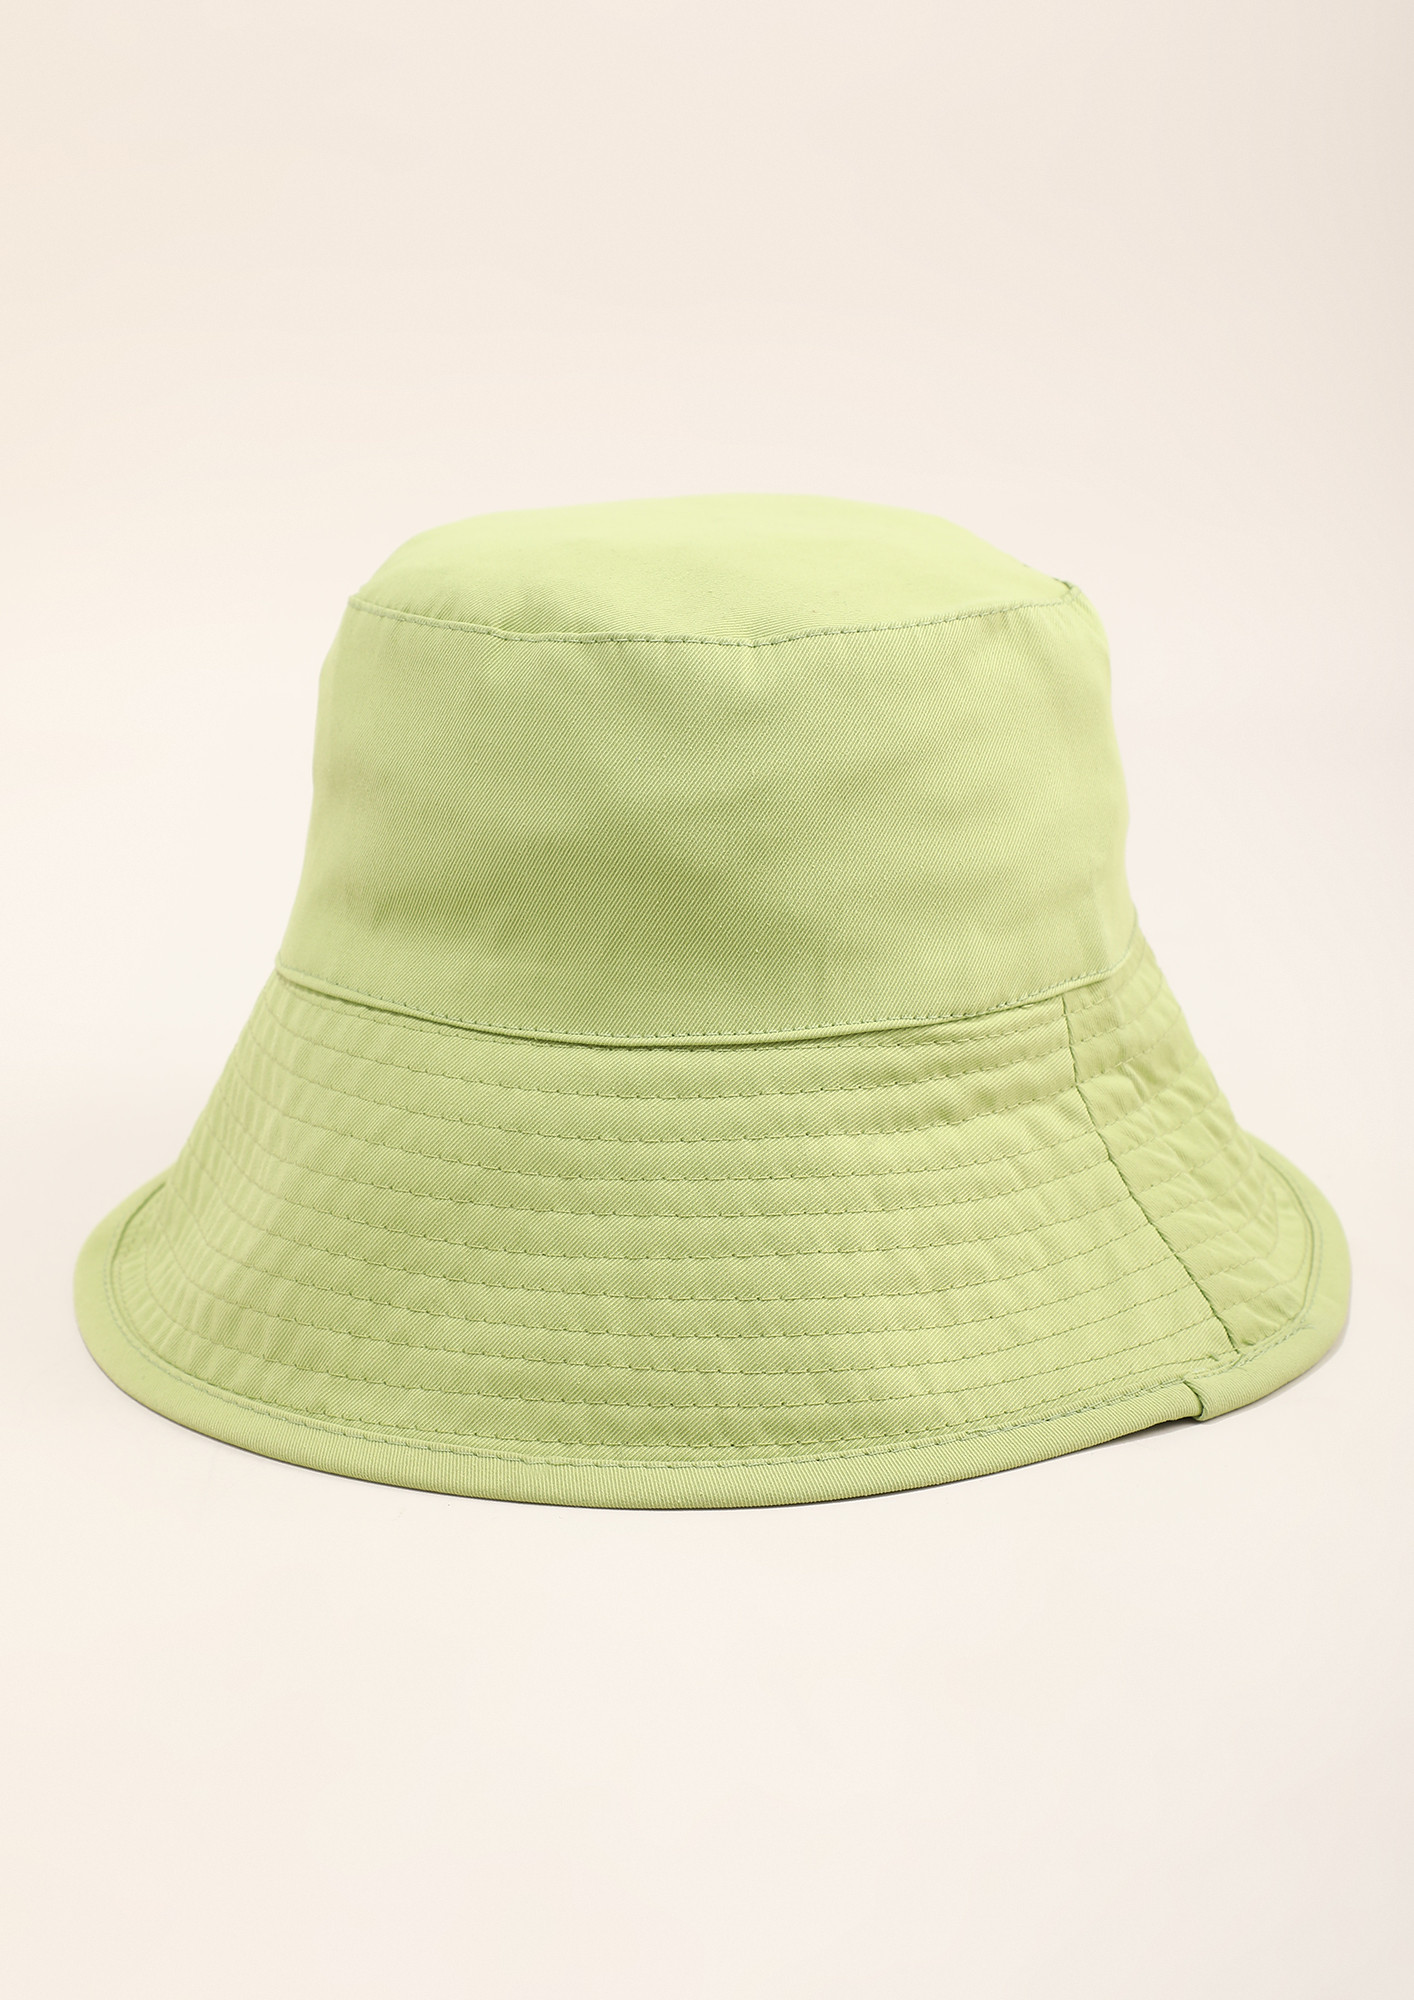 My Everyday Green Bucket Hat